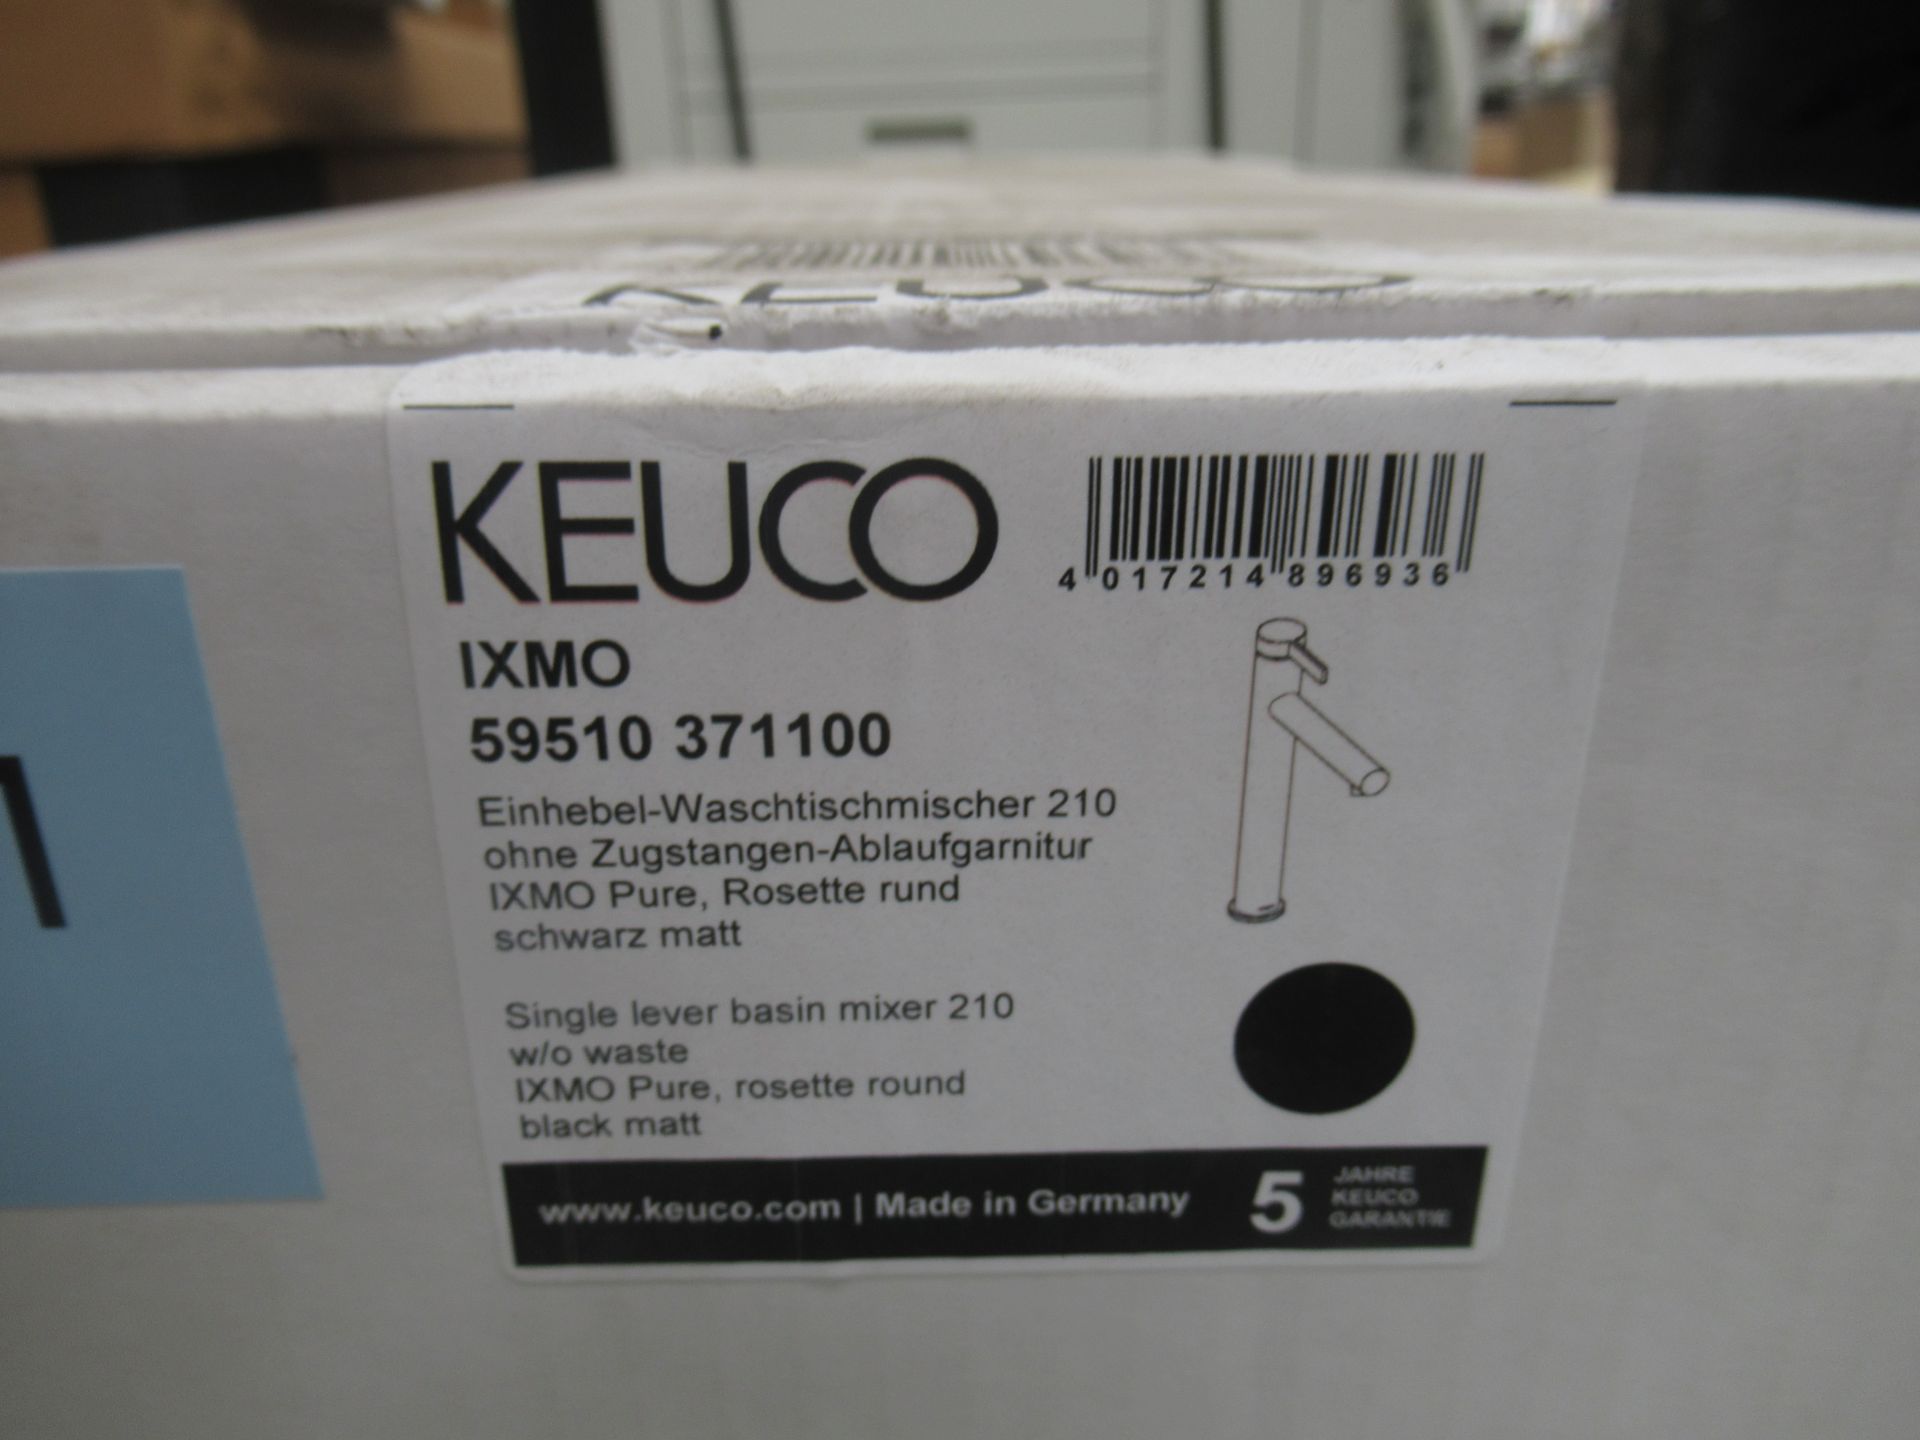 A Keuco IXMO Single Lever Basin Mixer 210-Tap, Black Matt, P/N 59510-37110 - Image 2 of 3